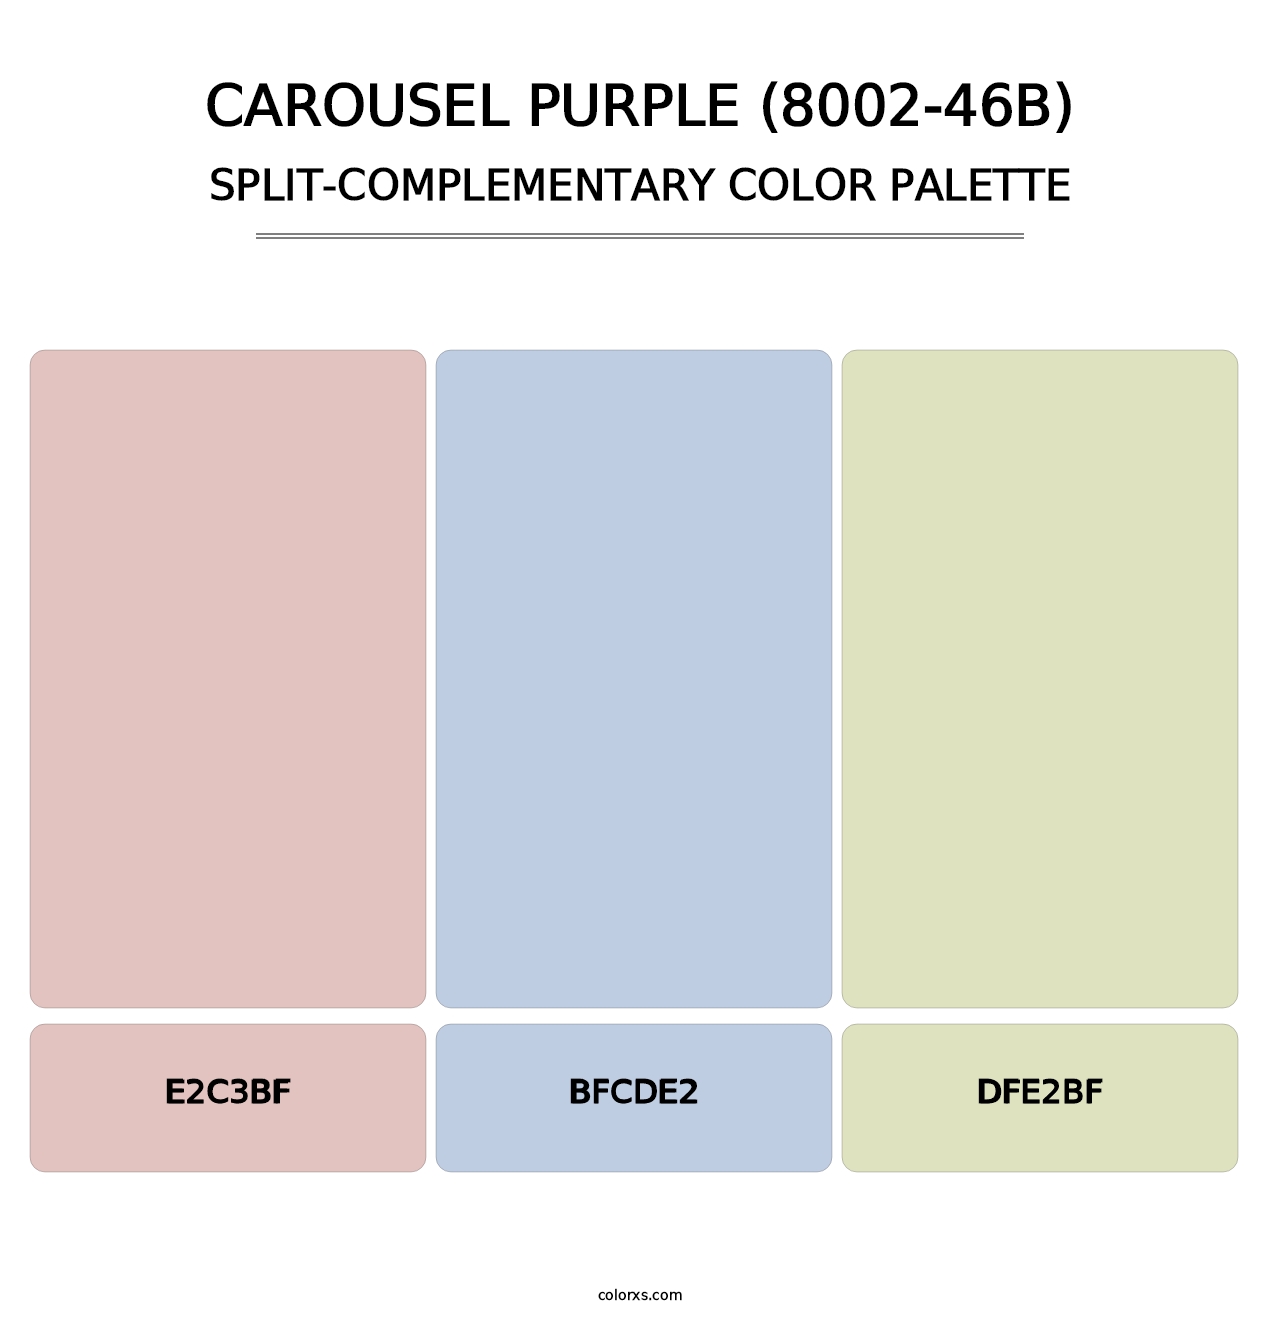 Carousel Purple (8002-46B) - Split-Complementary Color Palette